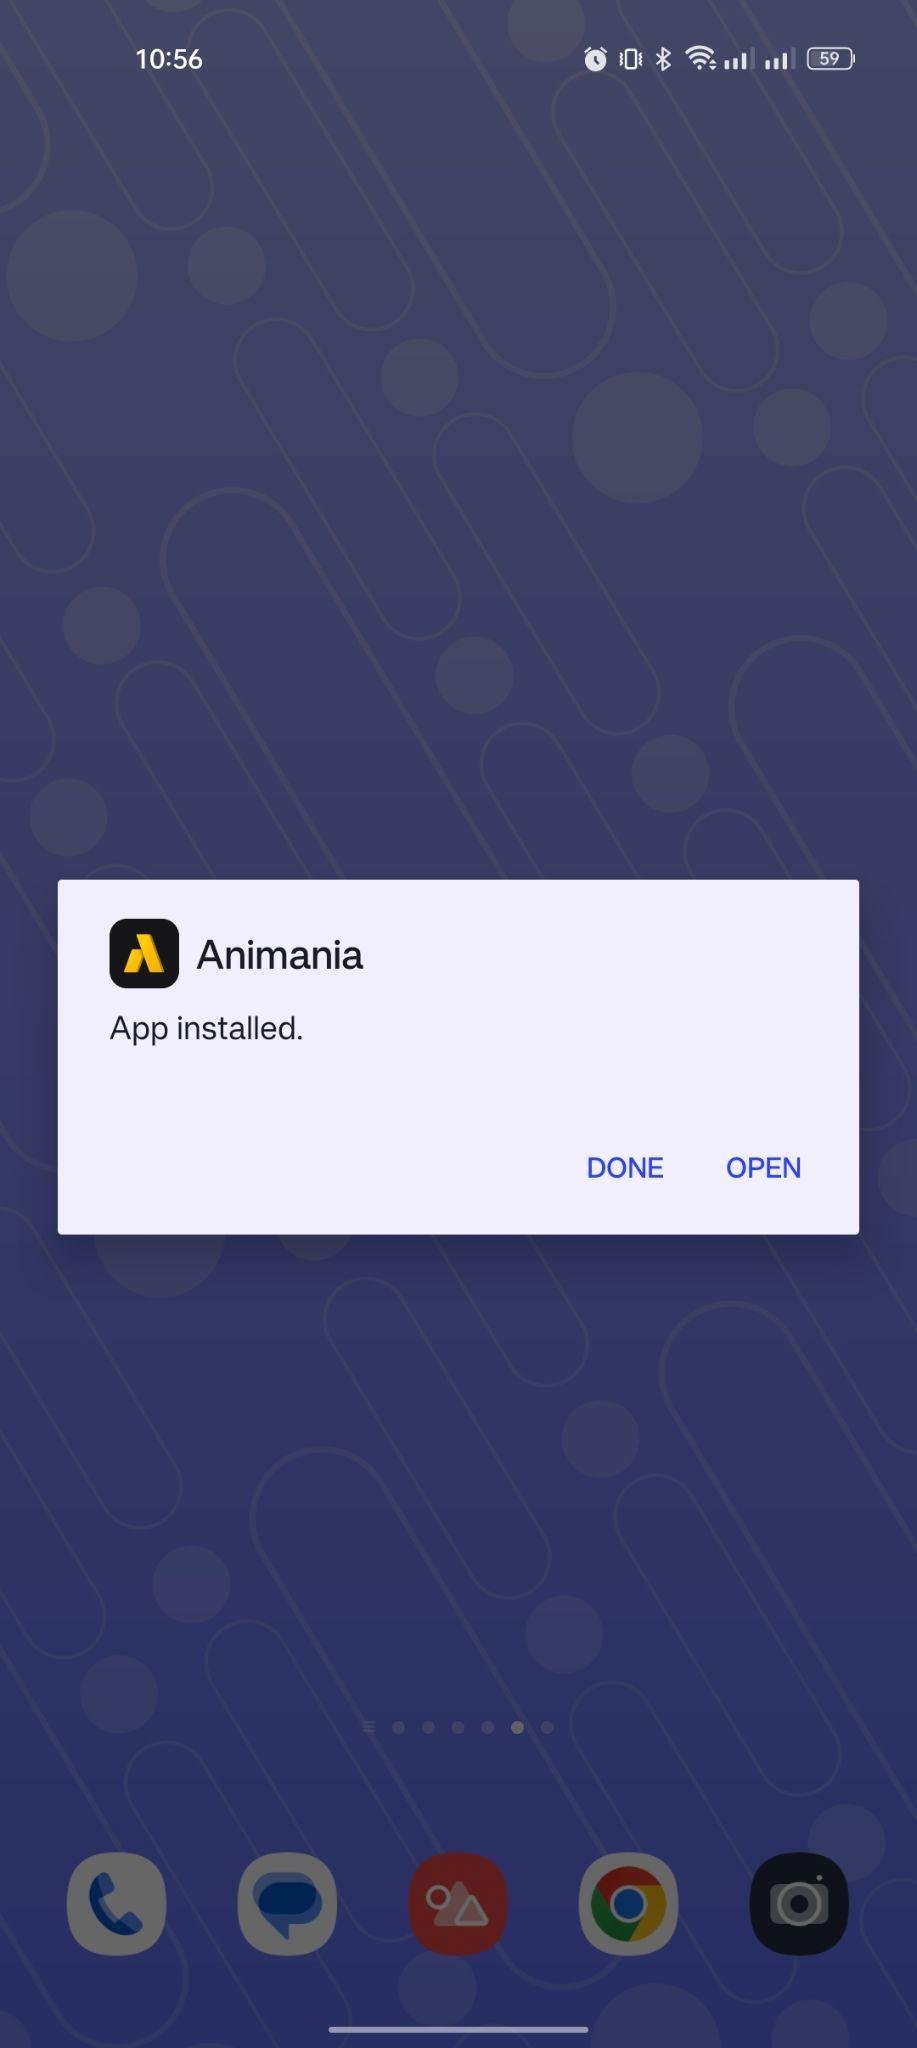 Animania apk installed